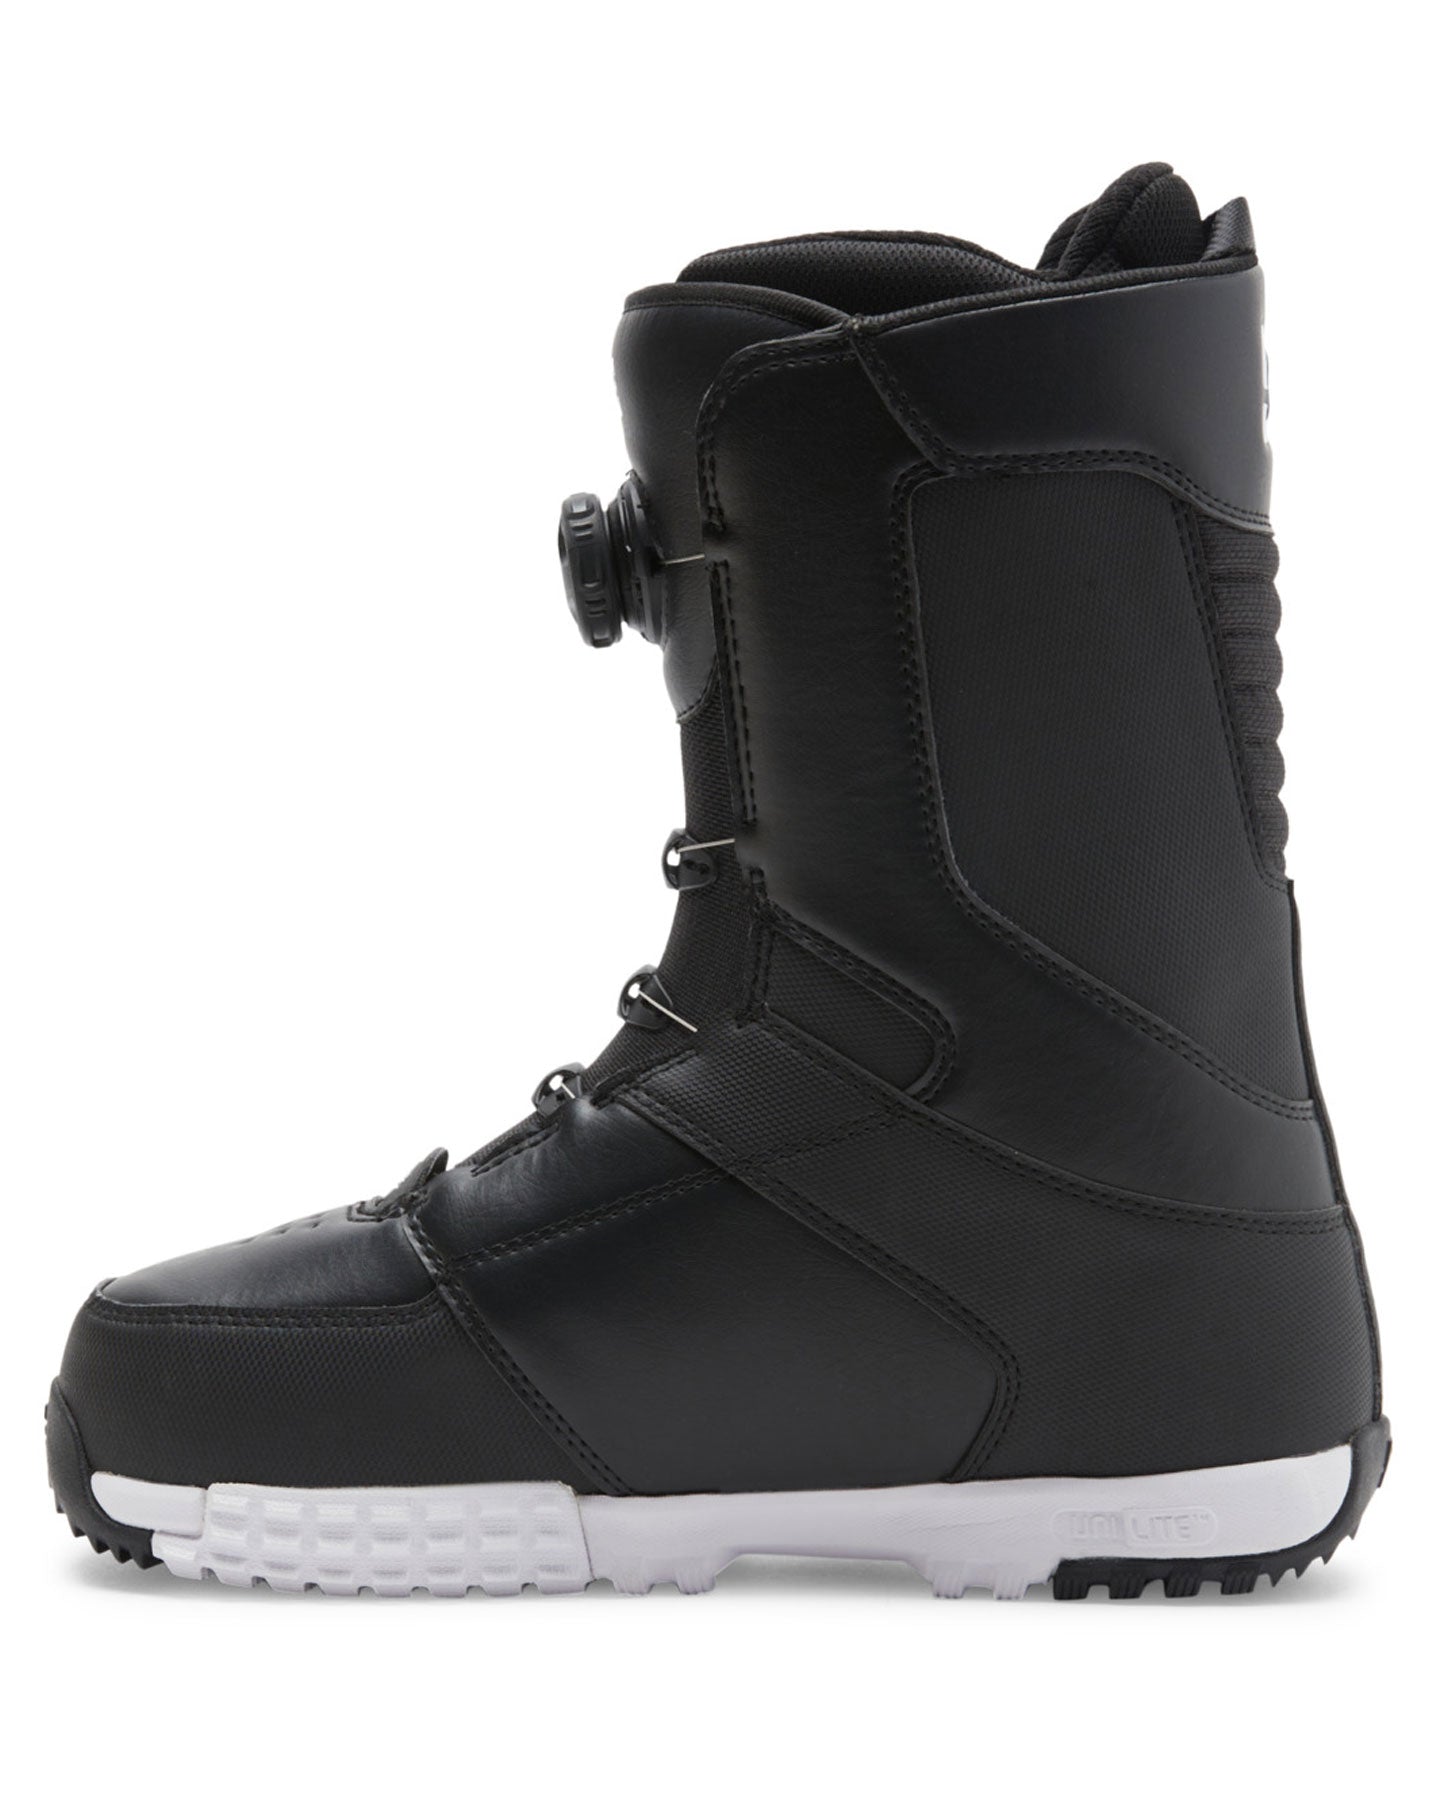 DC Control Boa® Snowboard Boots - Black/Black/White Men's Snowboard Boots - SnowSkiersWarehouse